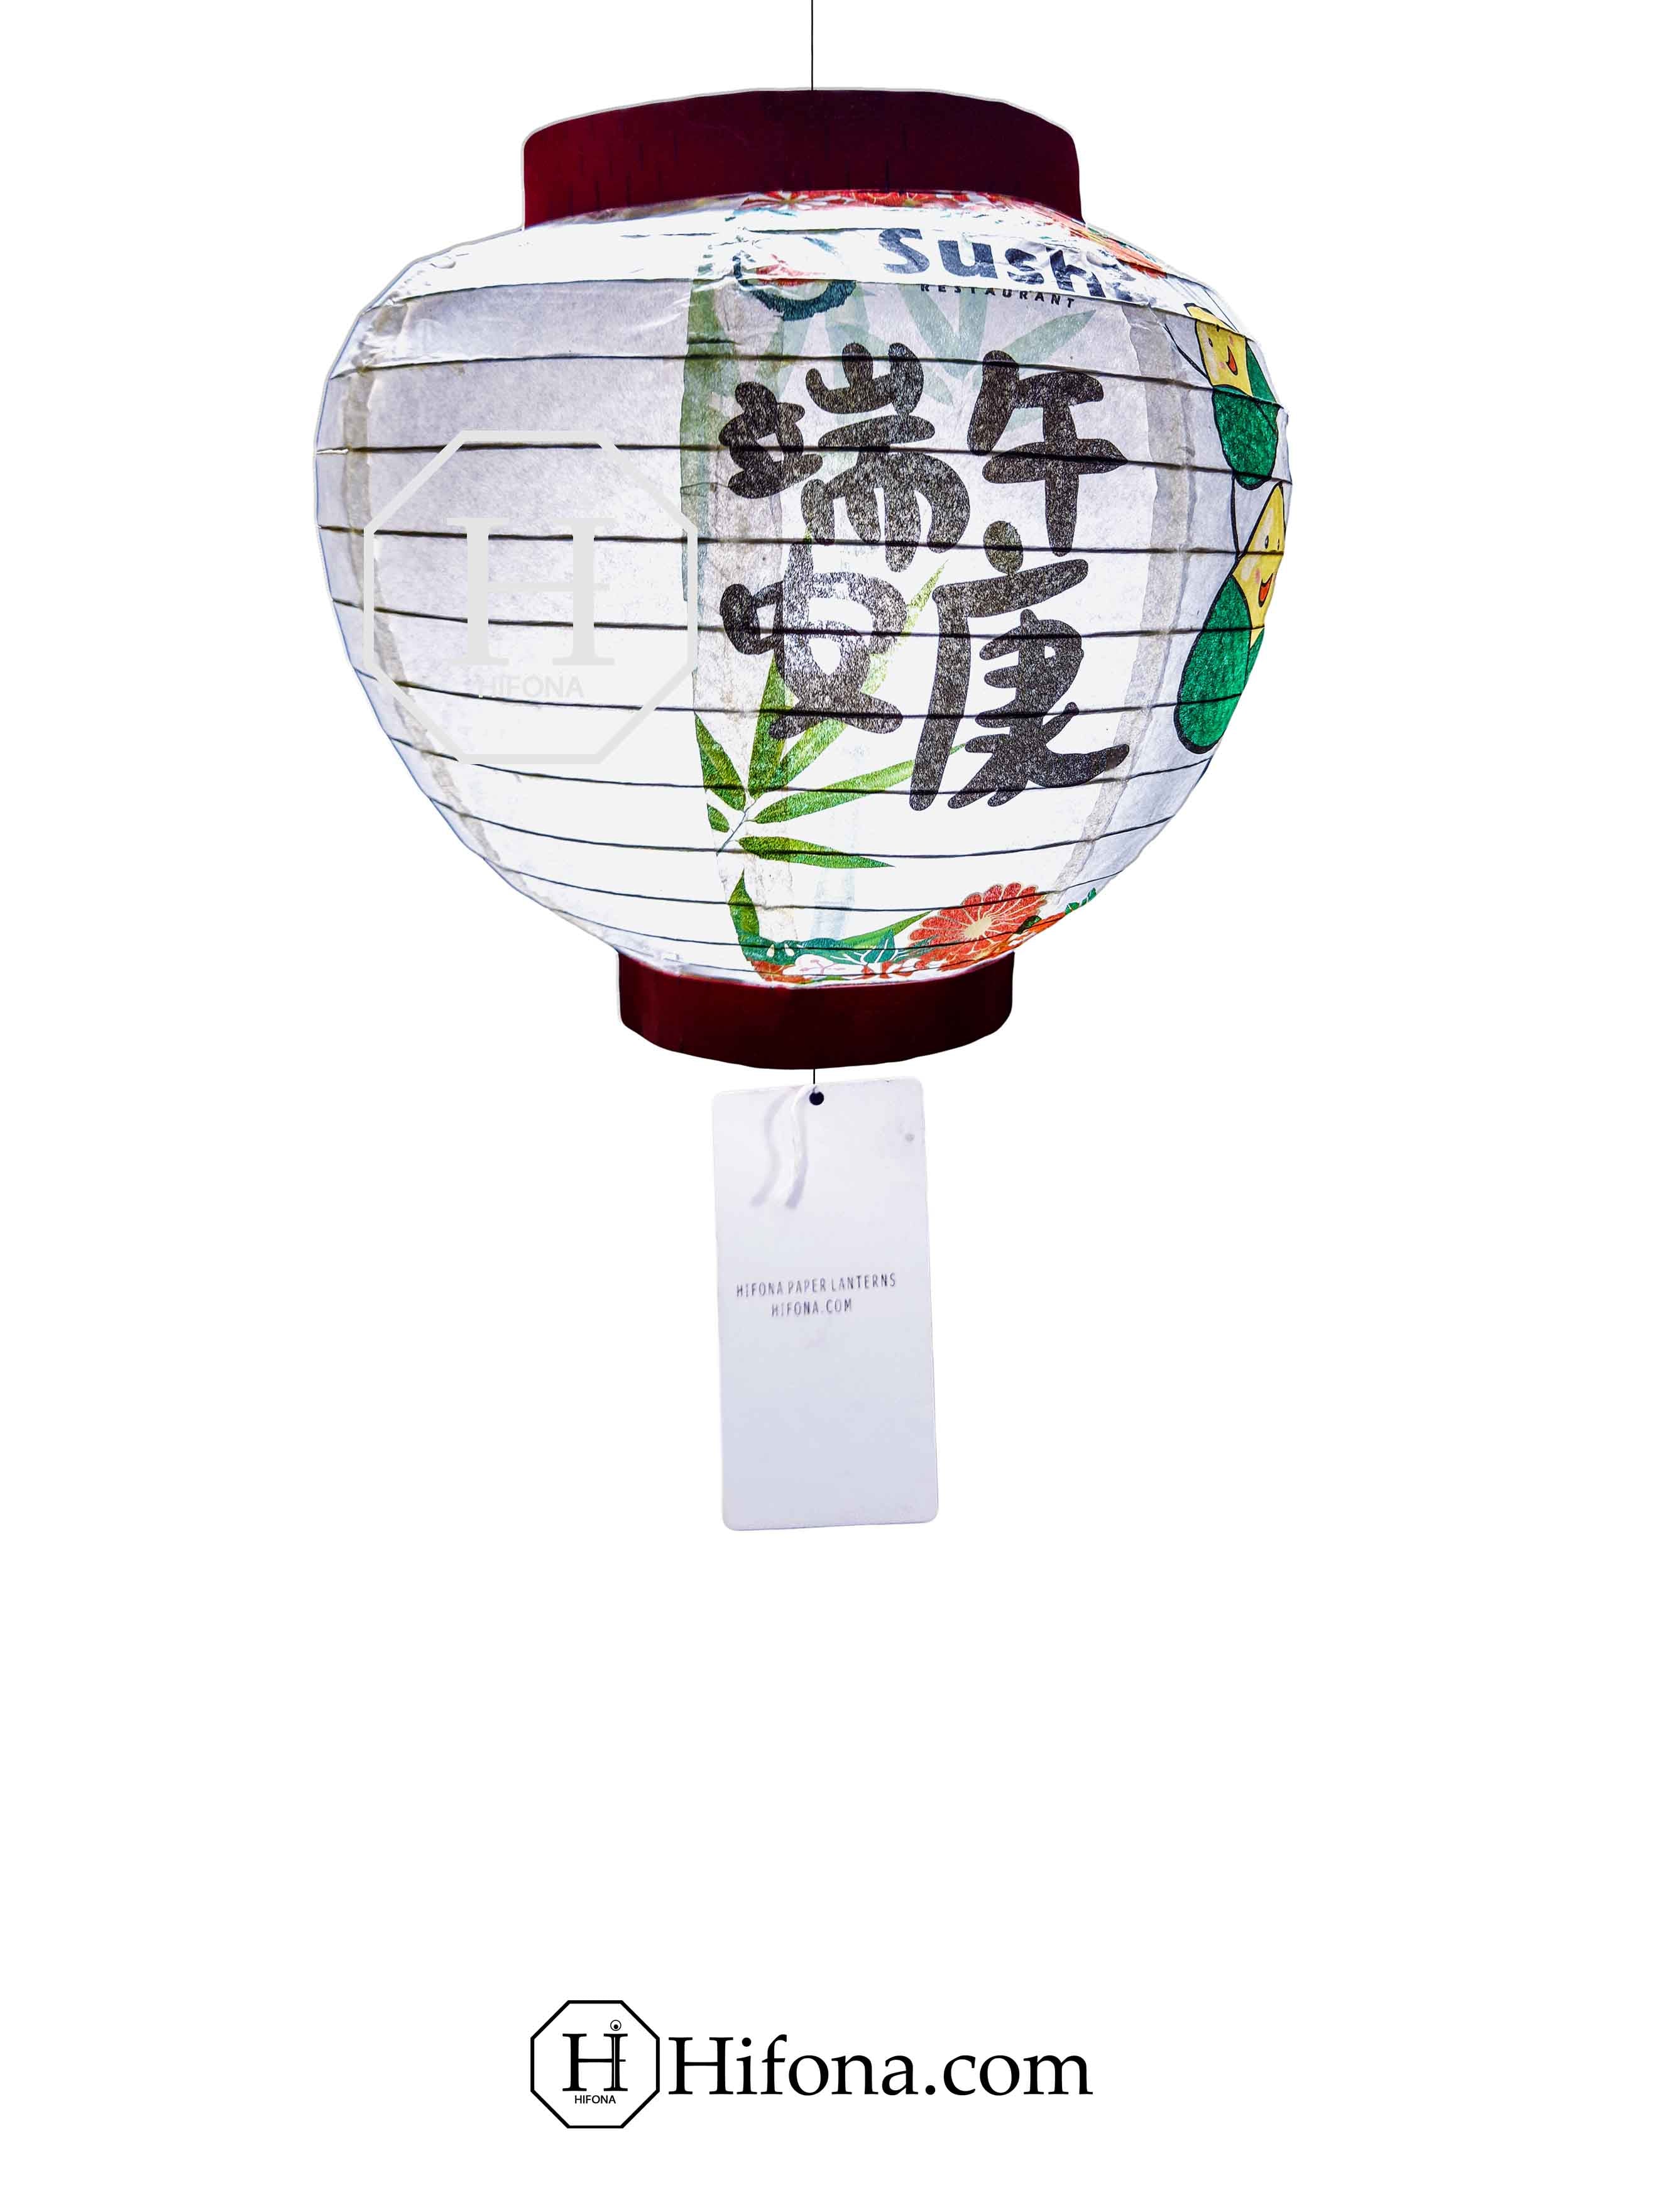  Custom Image Printed Lanterns: Showcasing Popular Japanese and Chinese Menu Items